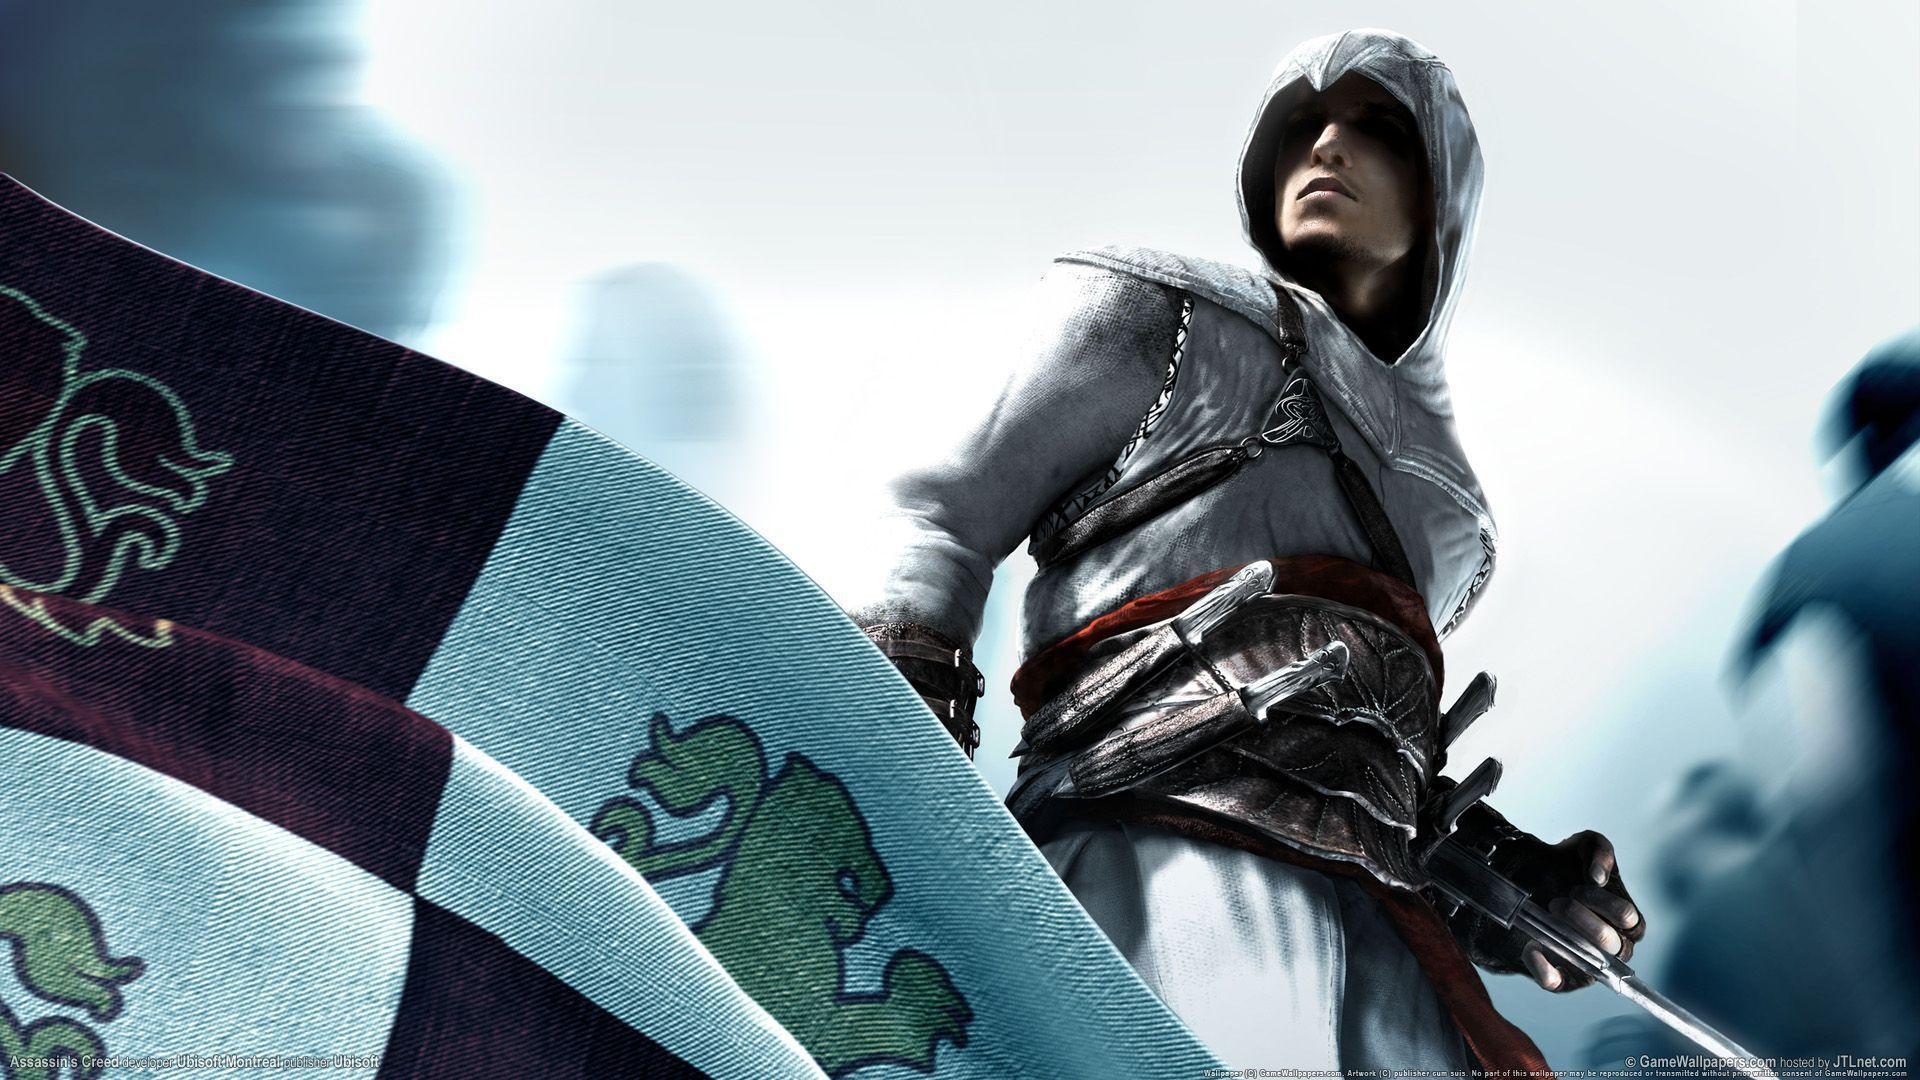 Assassins Creed 1080p Wallpaper HD. High Definition image